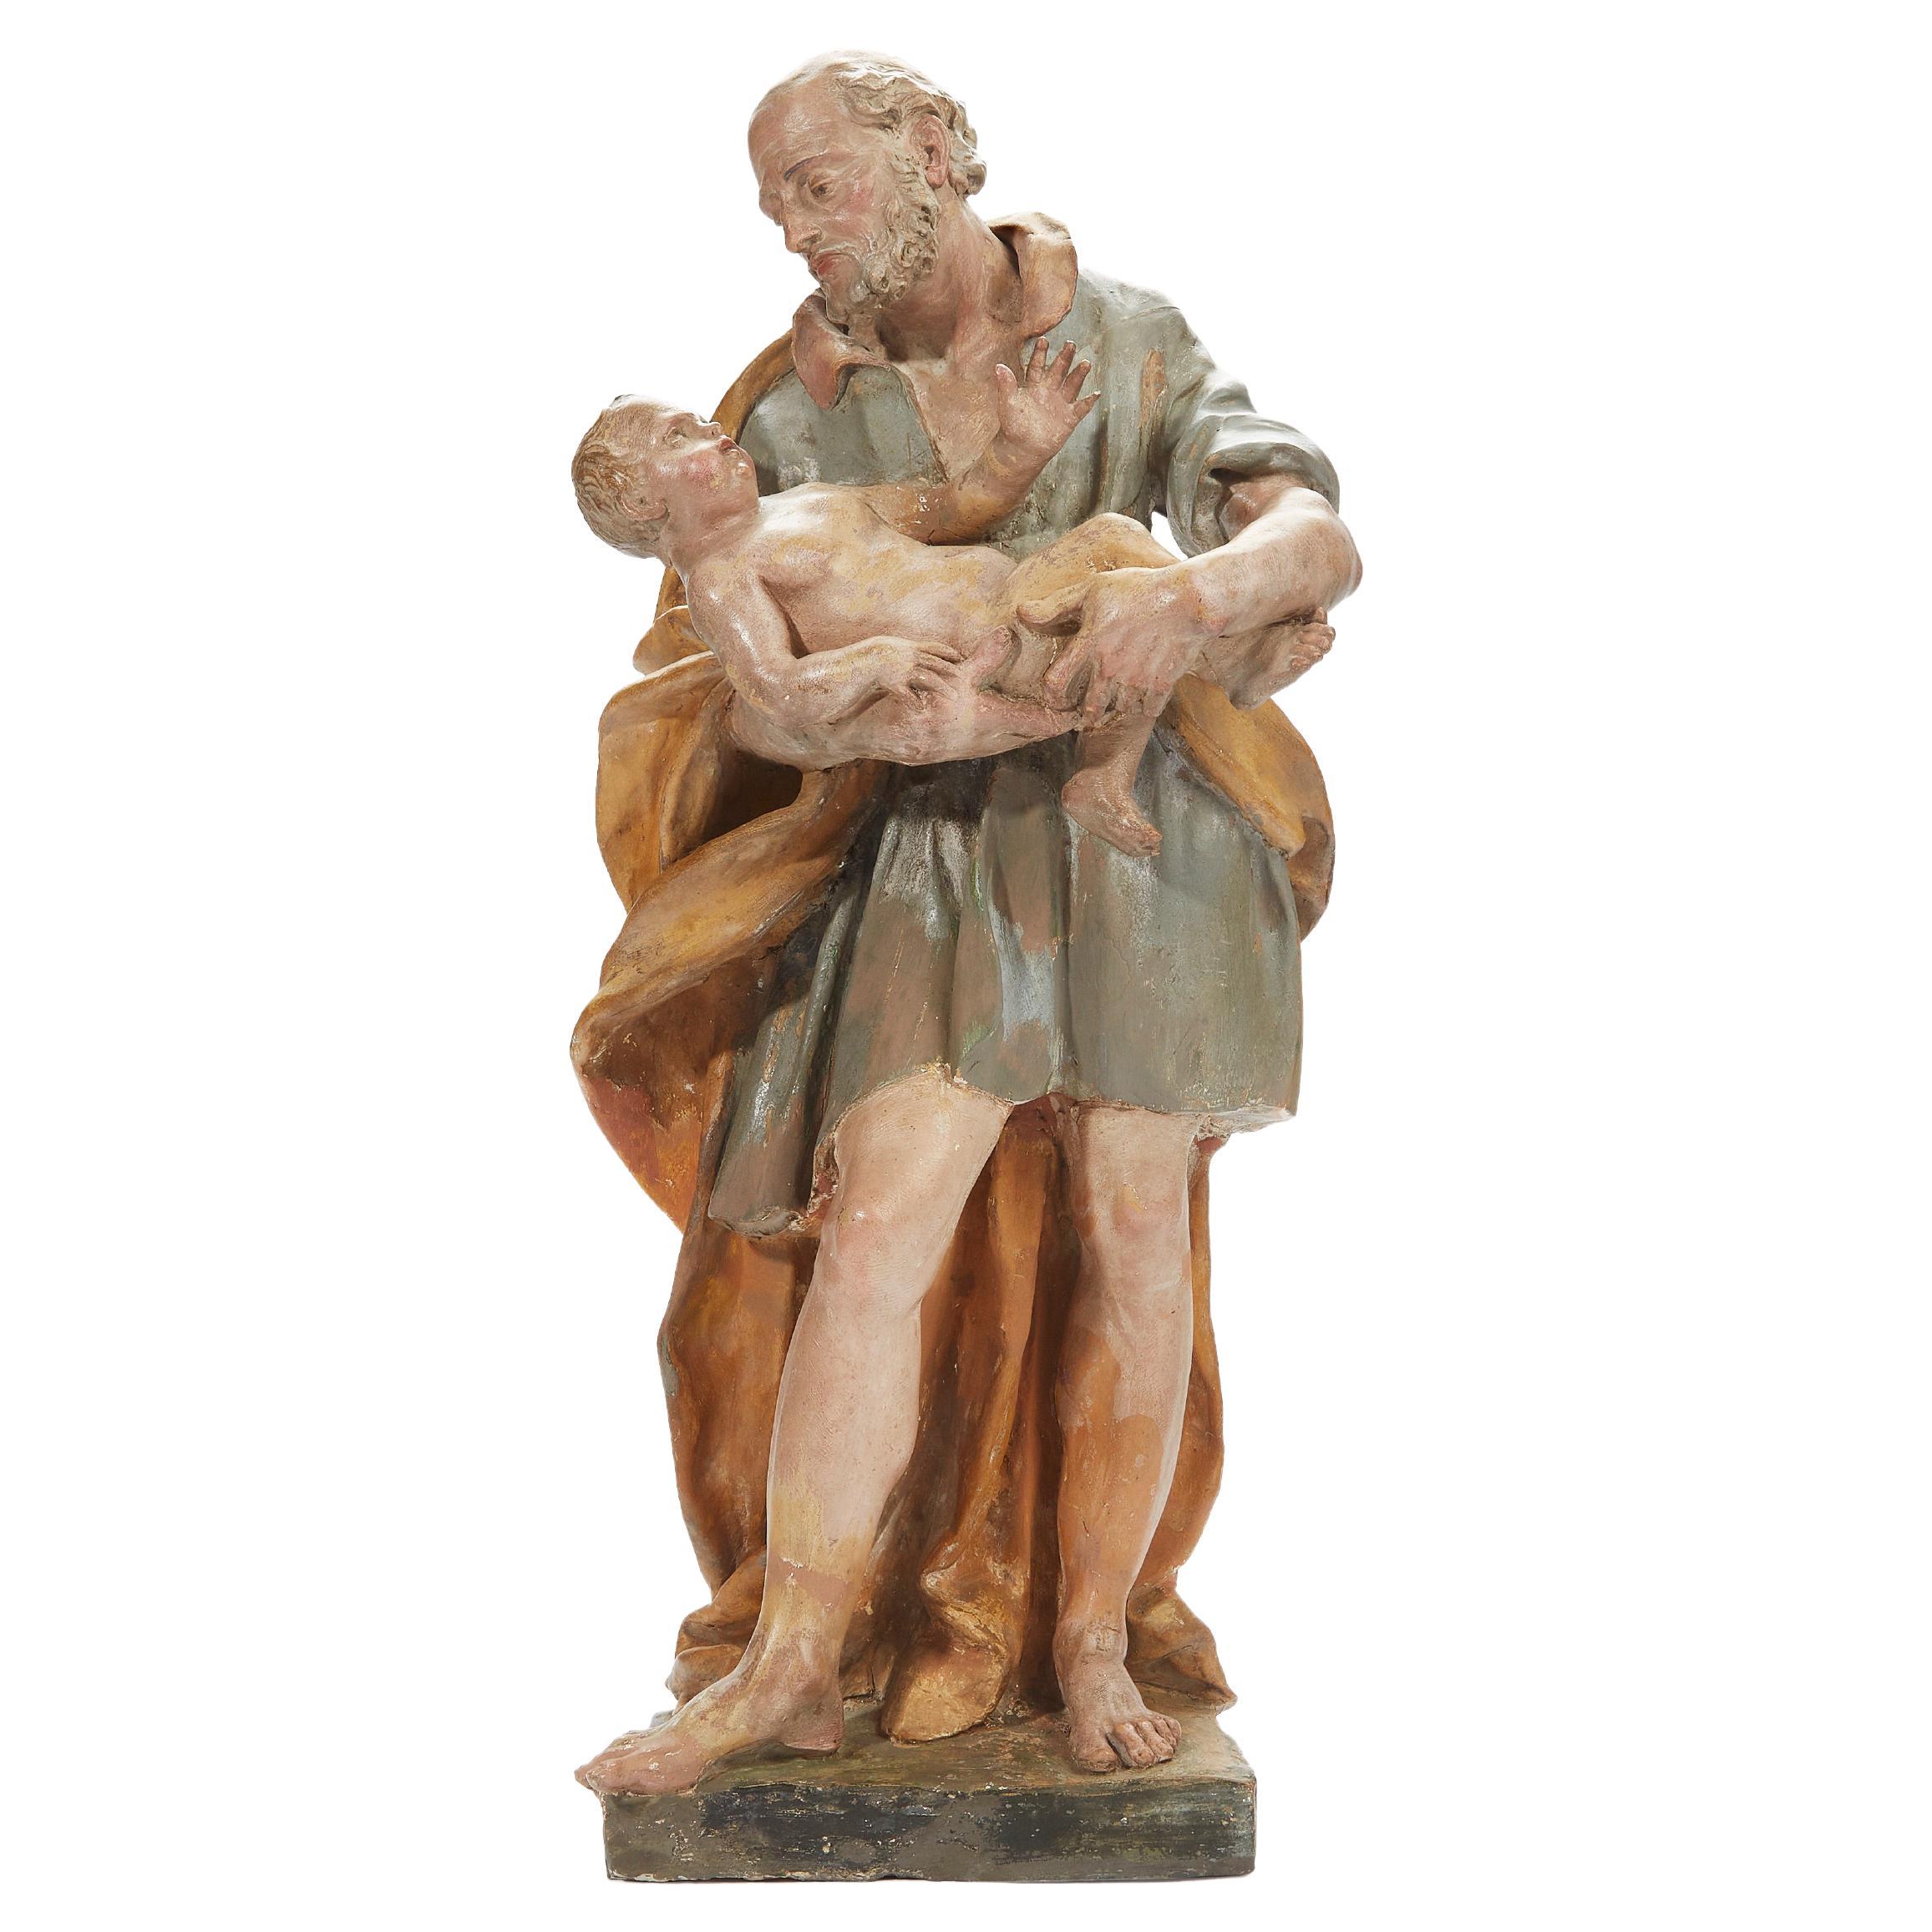 18th Century Italian St Joseph with Infant Jesus Baroque Old Master Sculpture